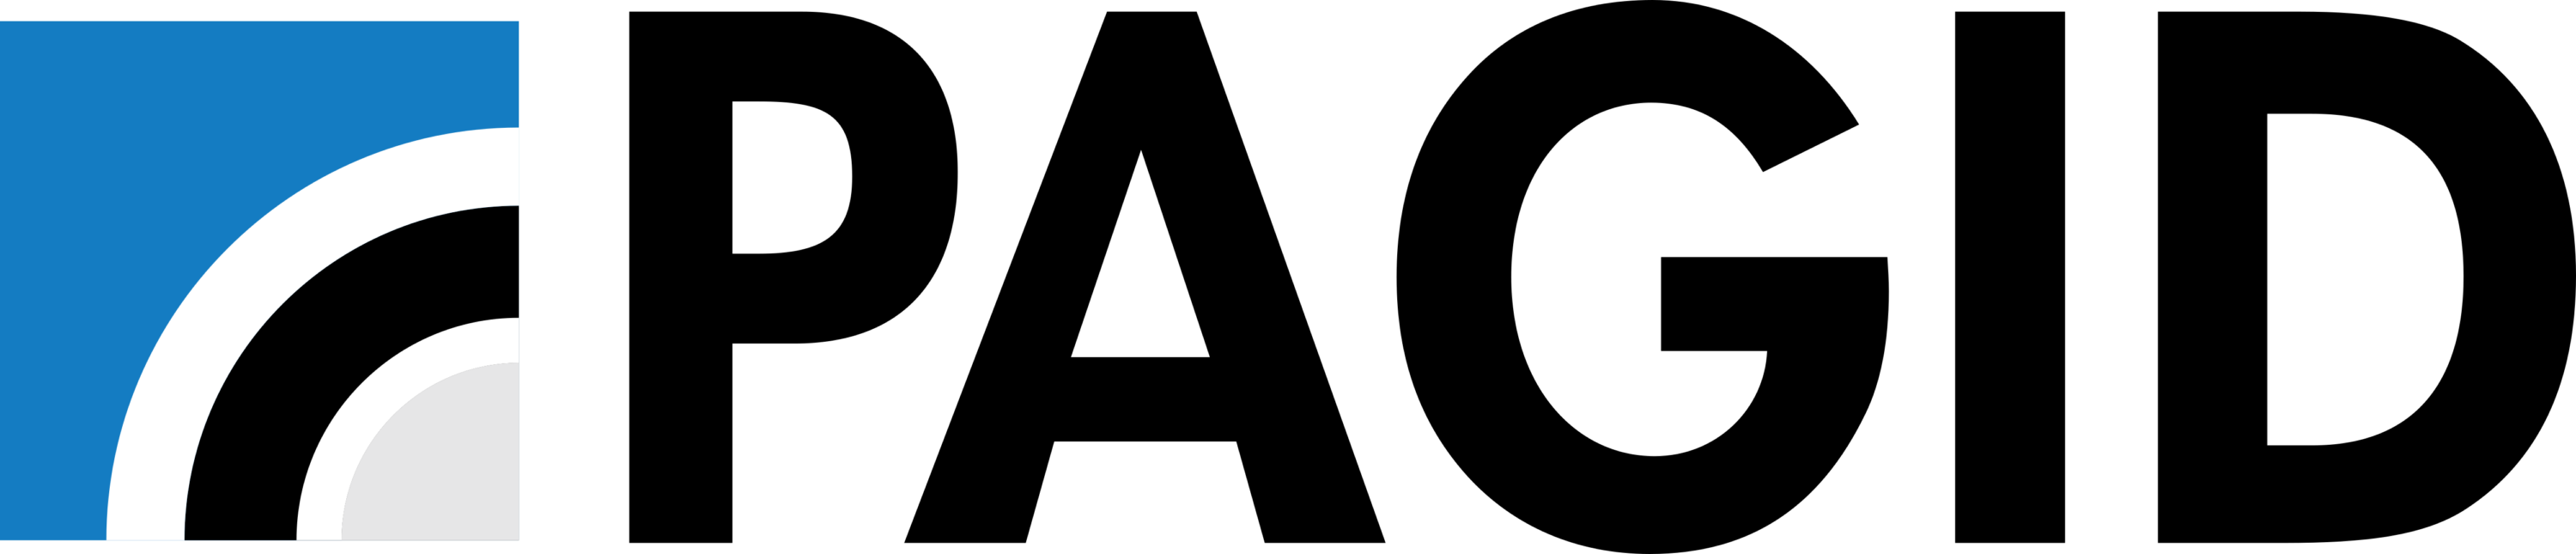 Pagid Logo